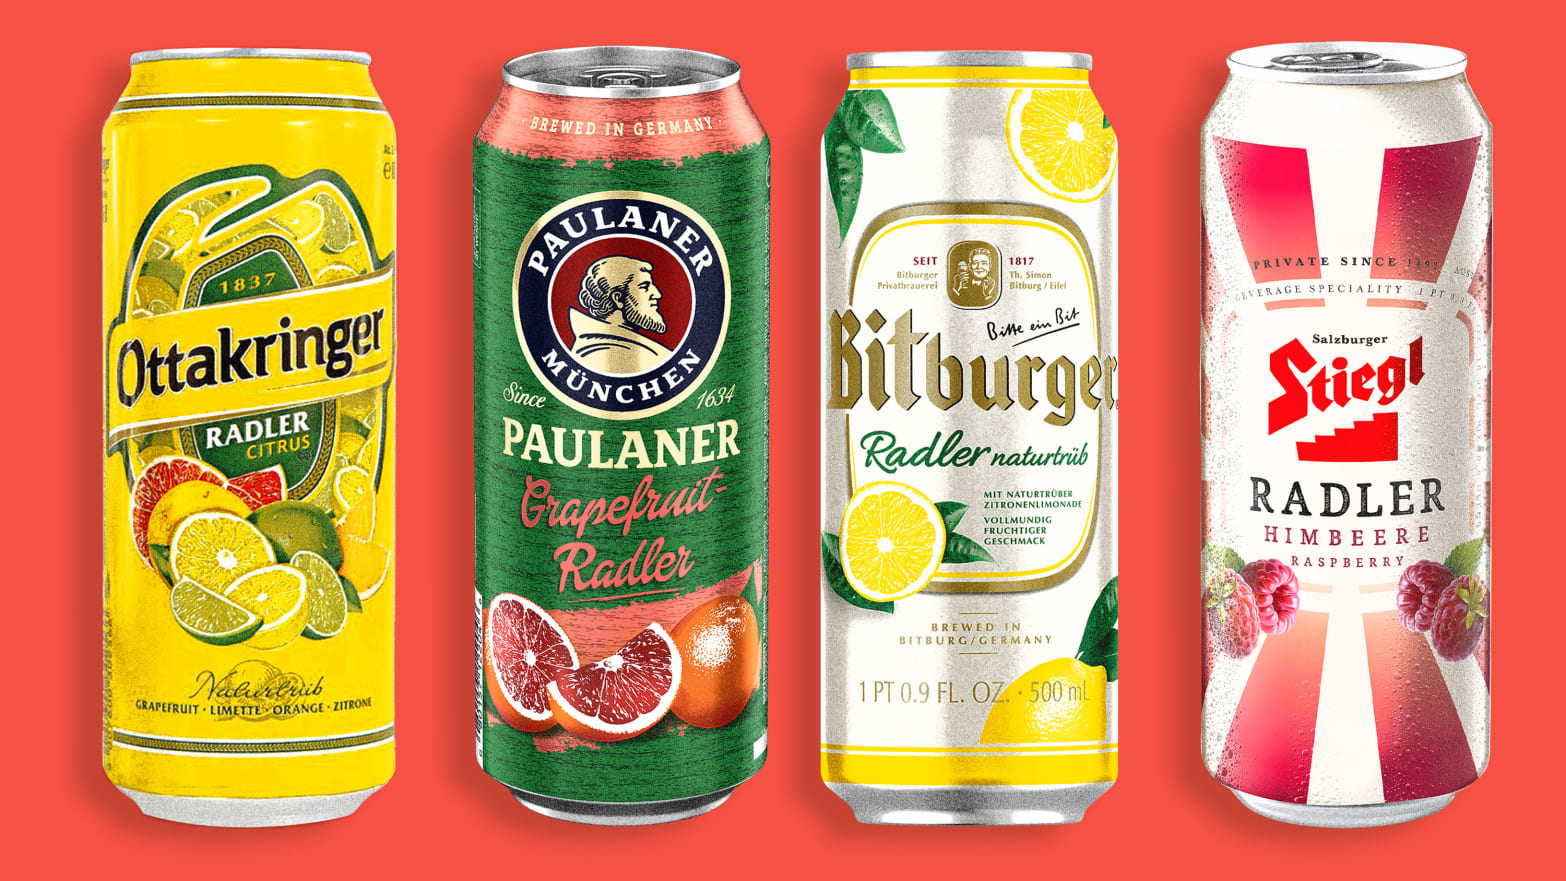 Your Drink of Summer Should Be Radler, a Refreshing German Beer photo pic